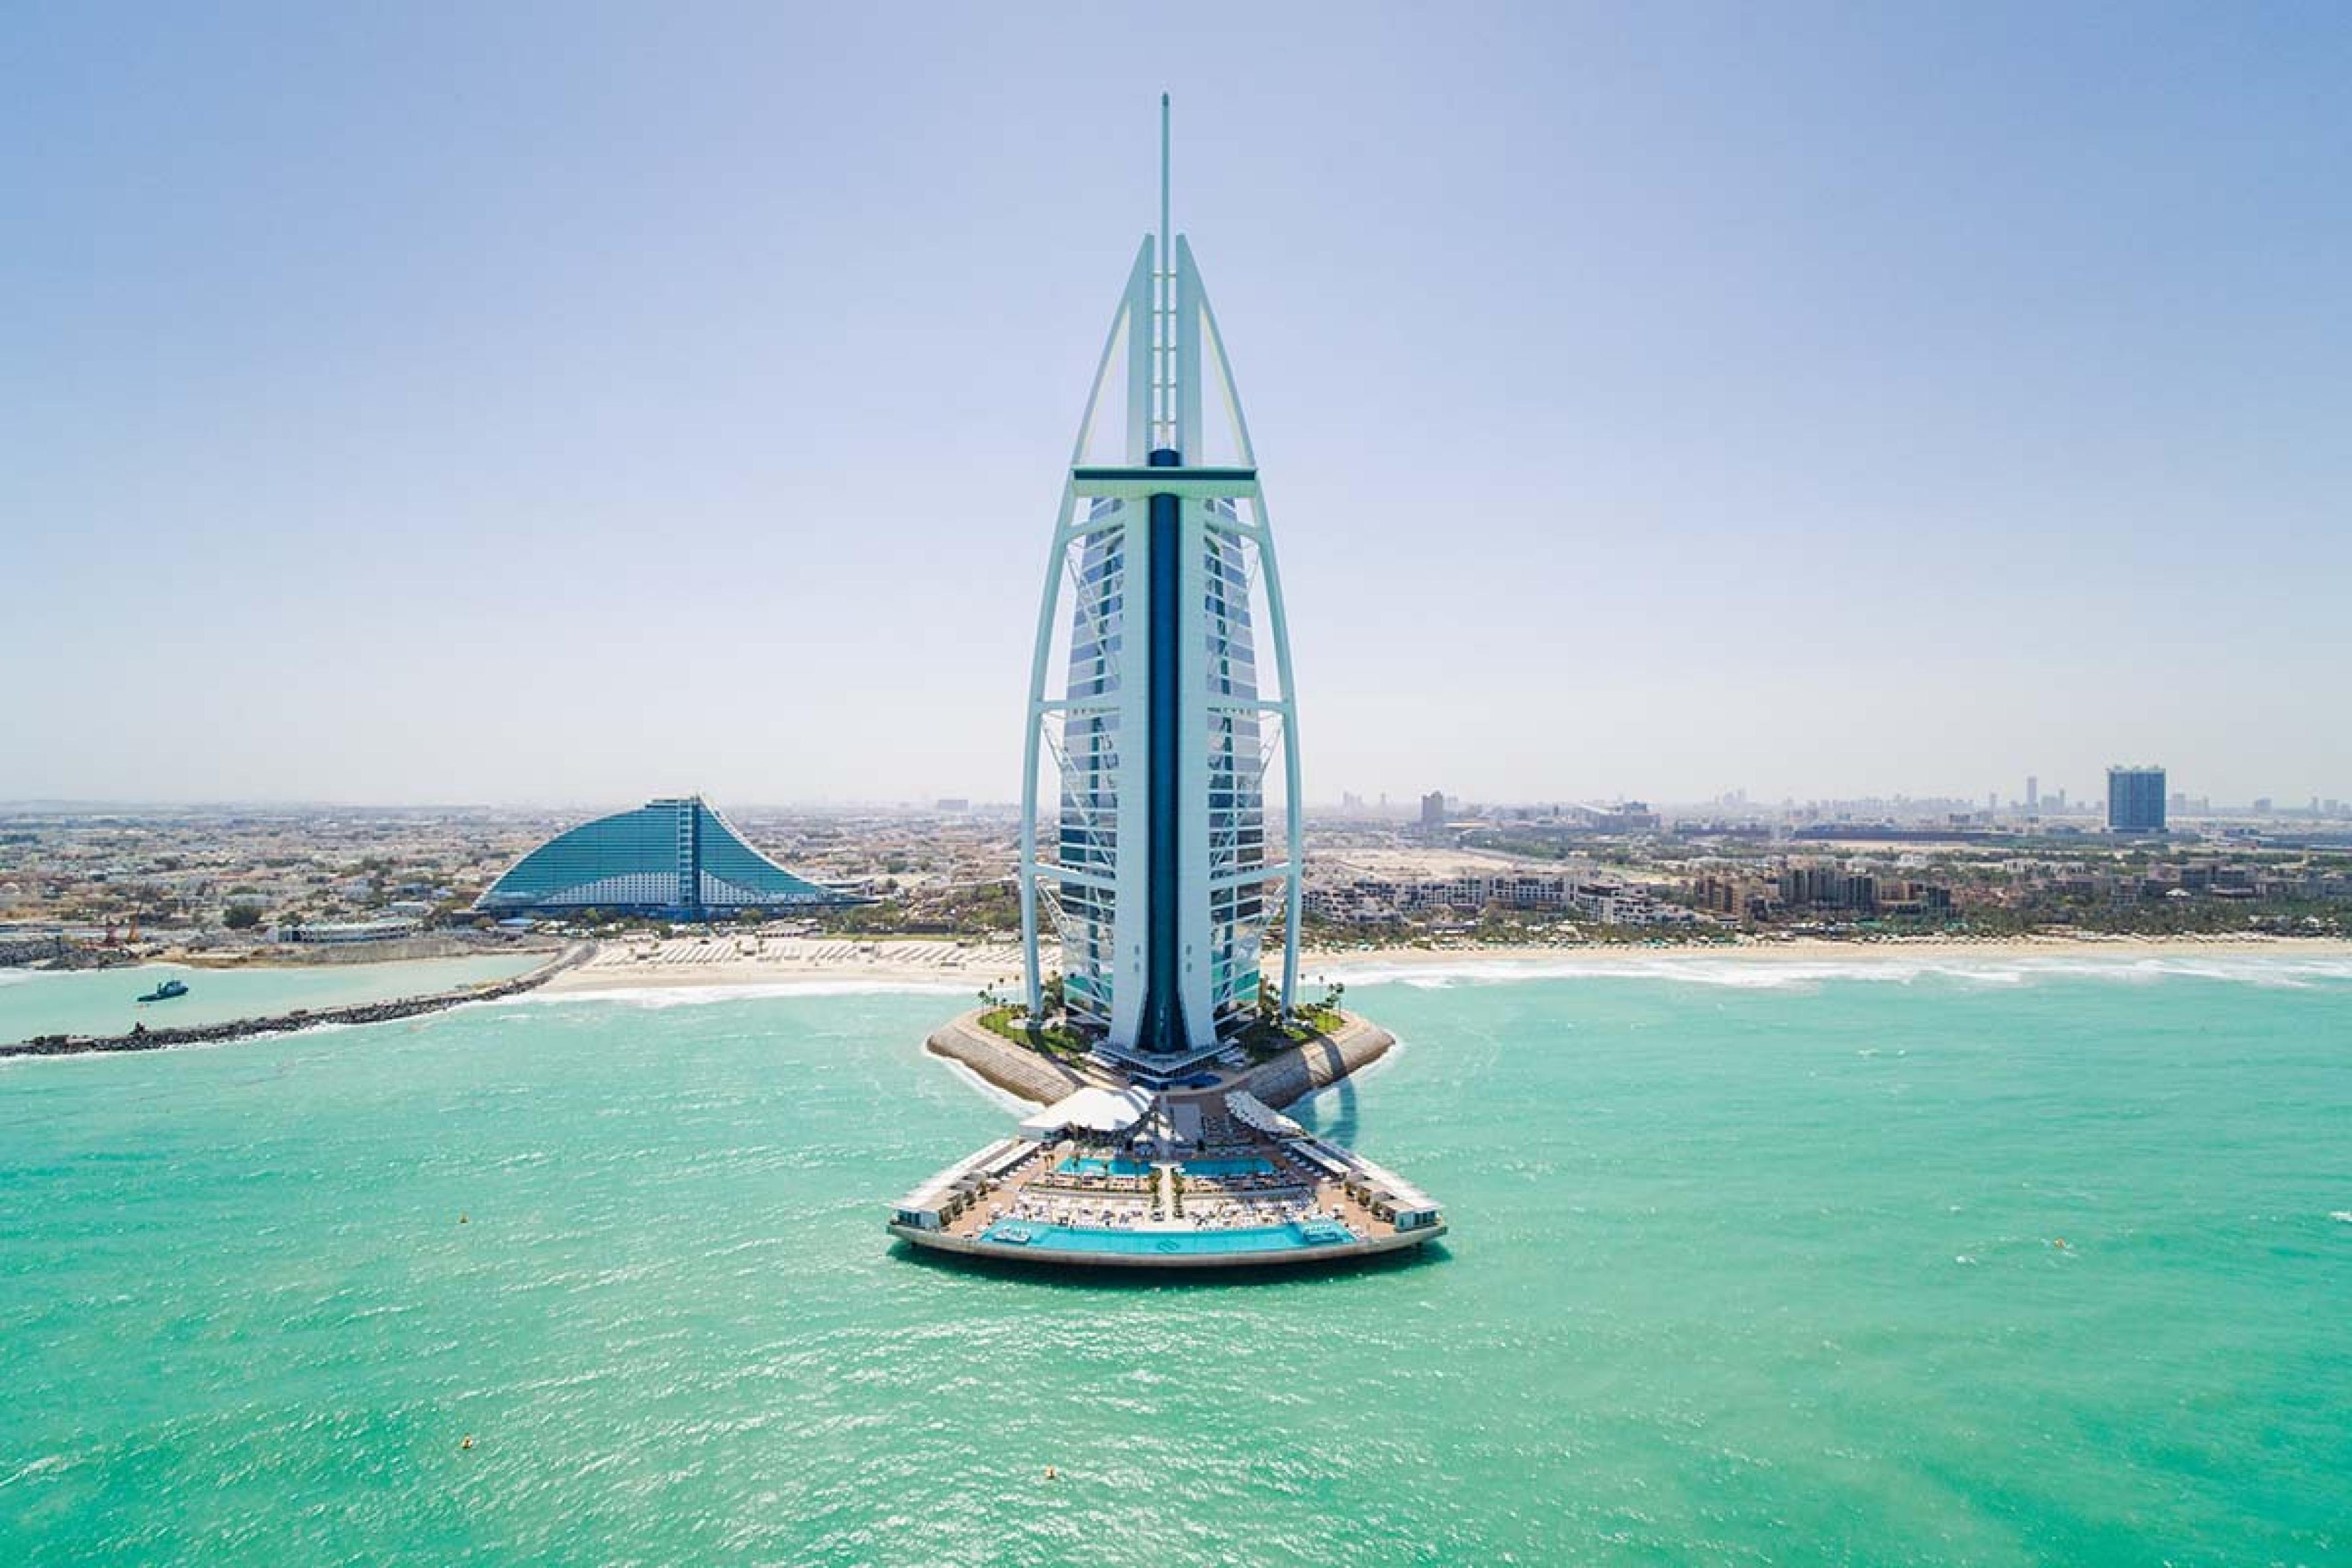 contemporary sky scraper on a peninsula sticking out from Dubai